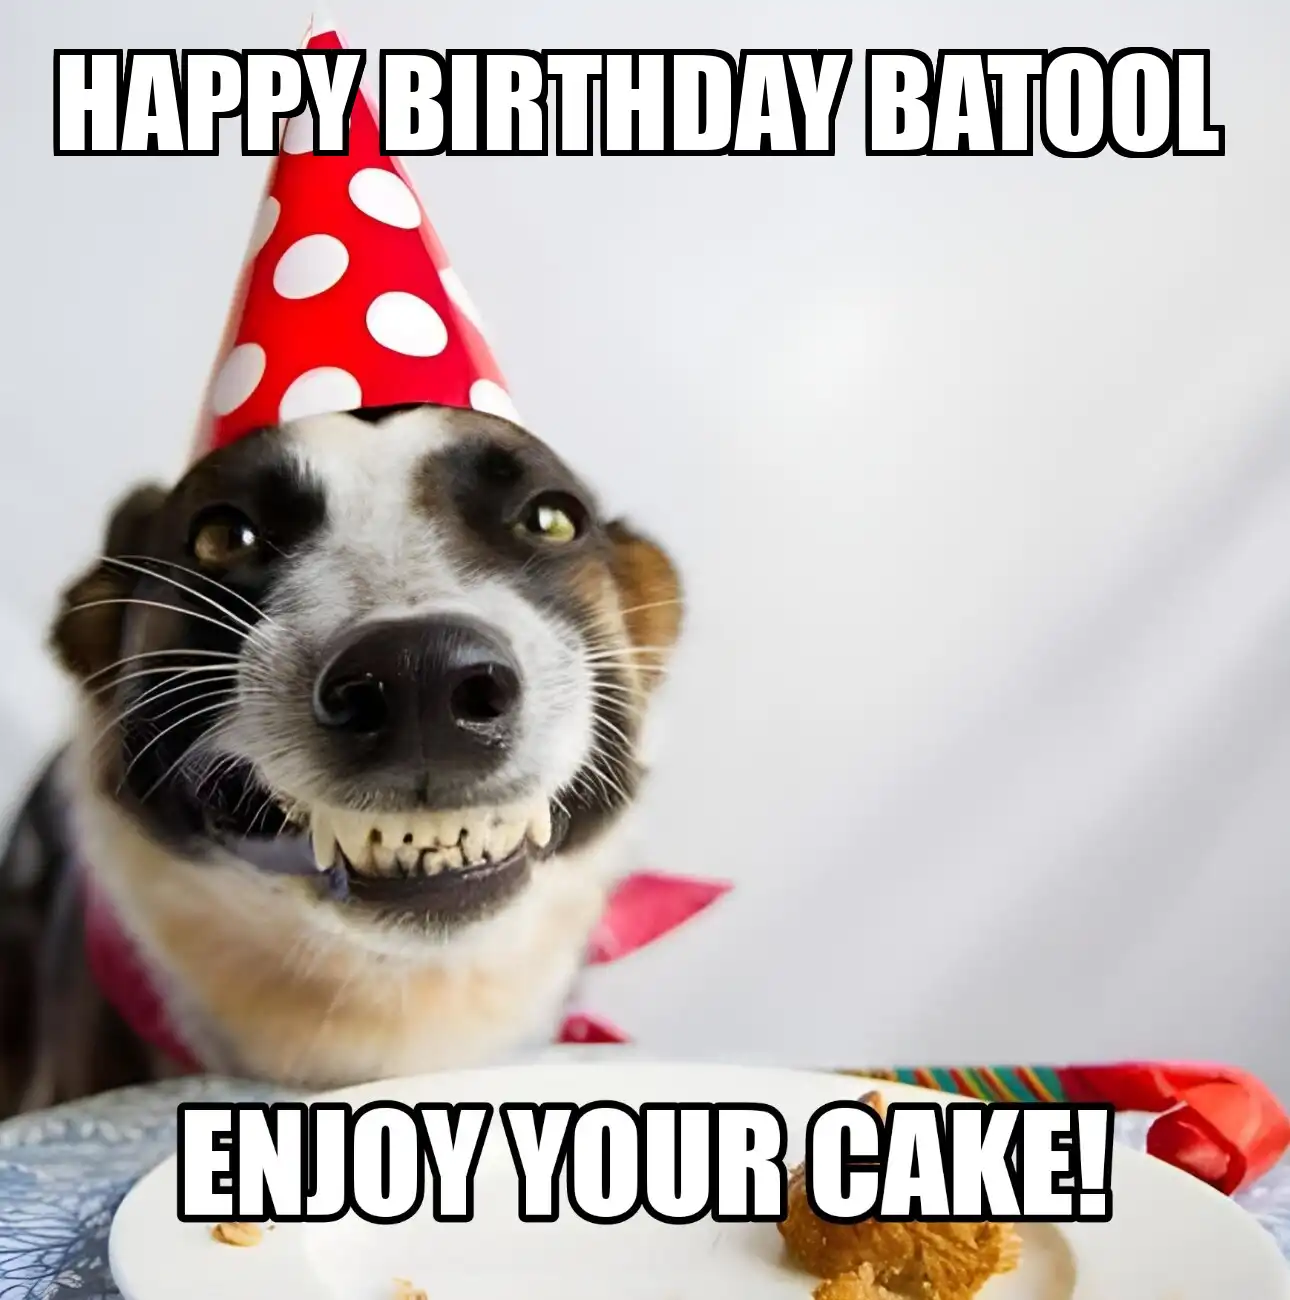 Happy Birthday Batool Enjoy Your Cake Dog Meme